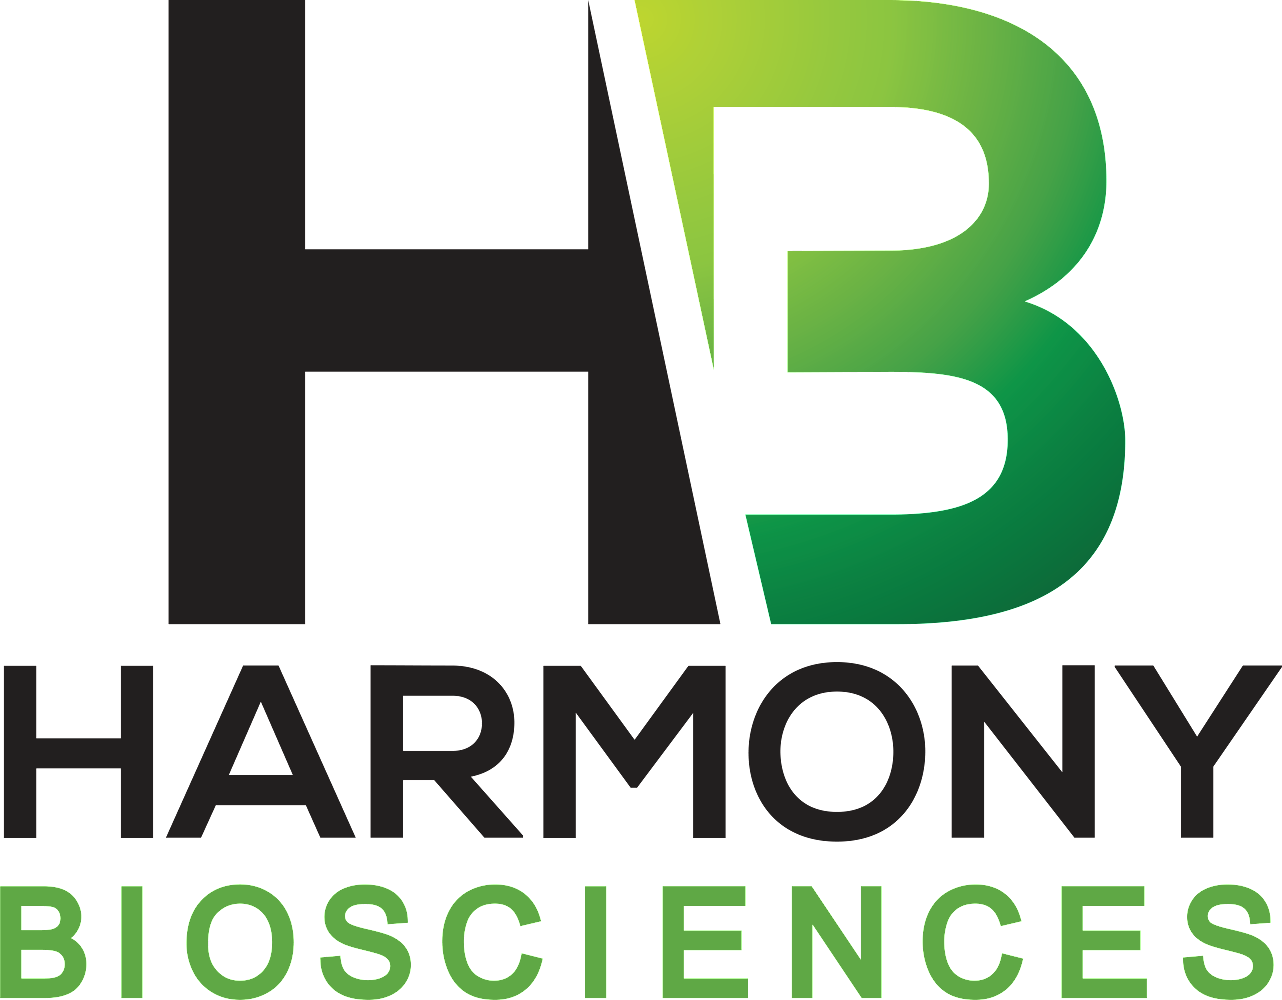 Harmony Biosciences